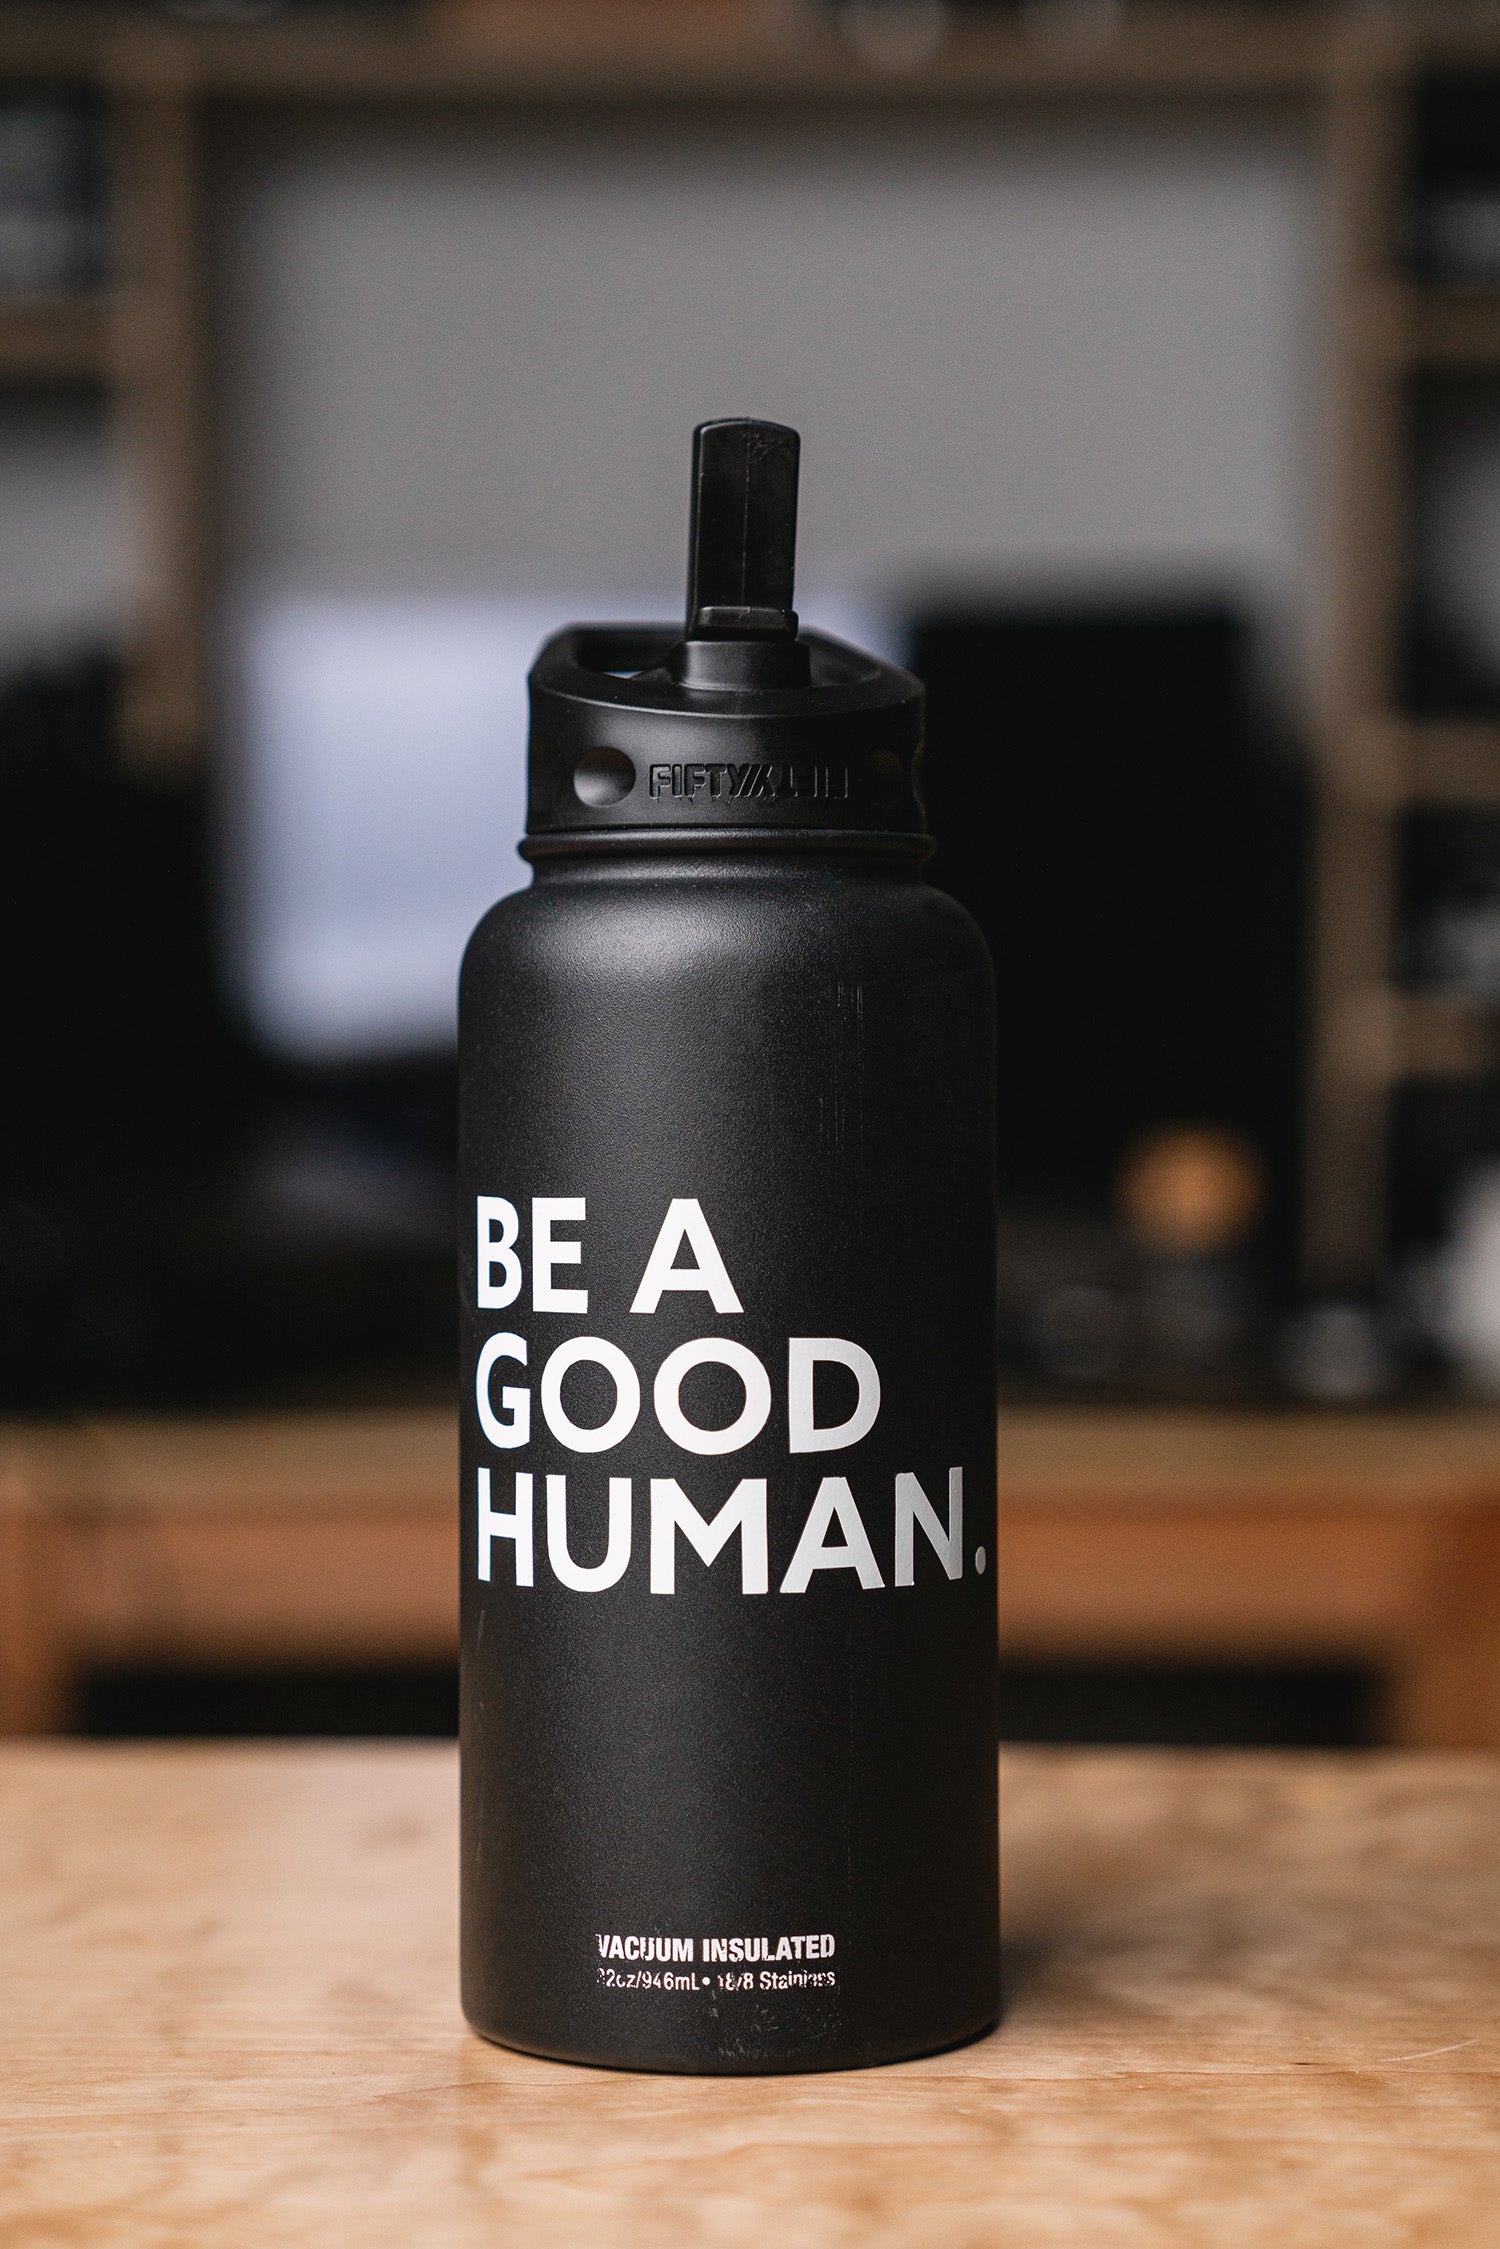 BE A GOOD HUMAN. Vinyl Transfer Sticker